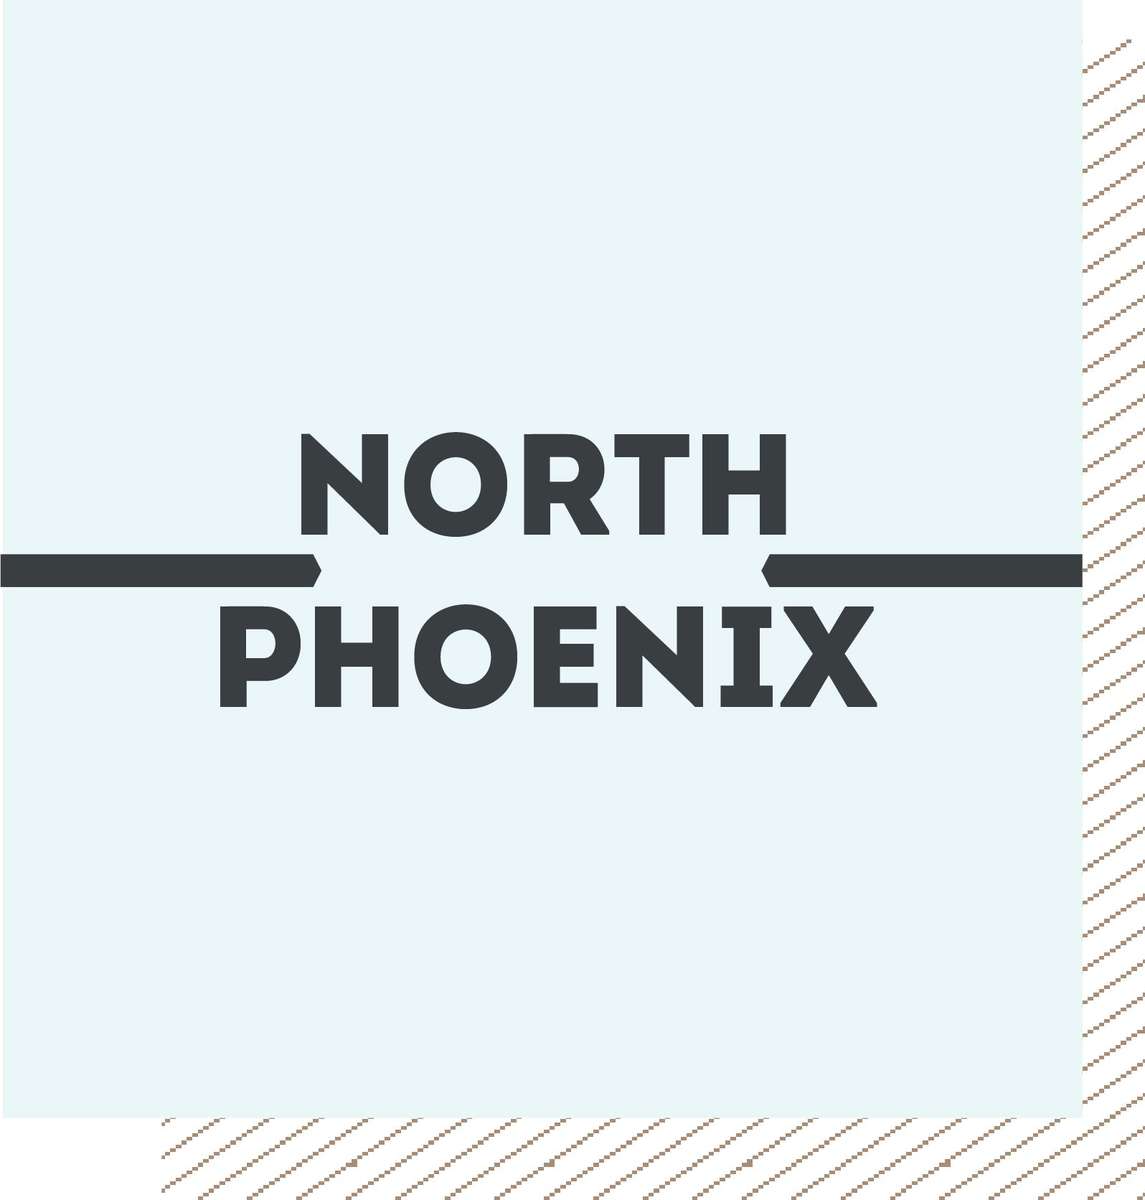 NORTH PHOENIX